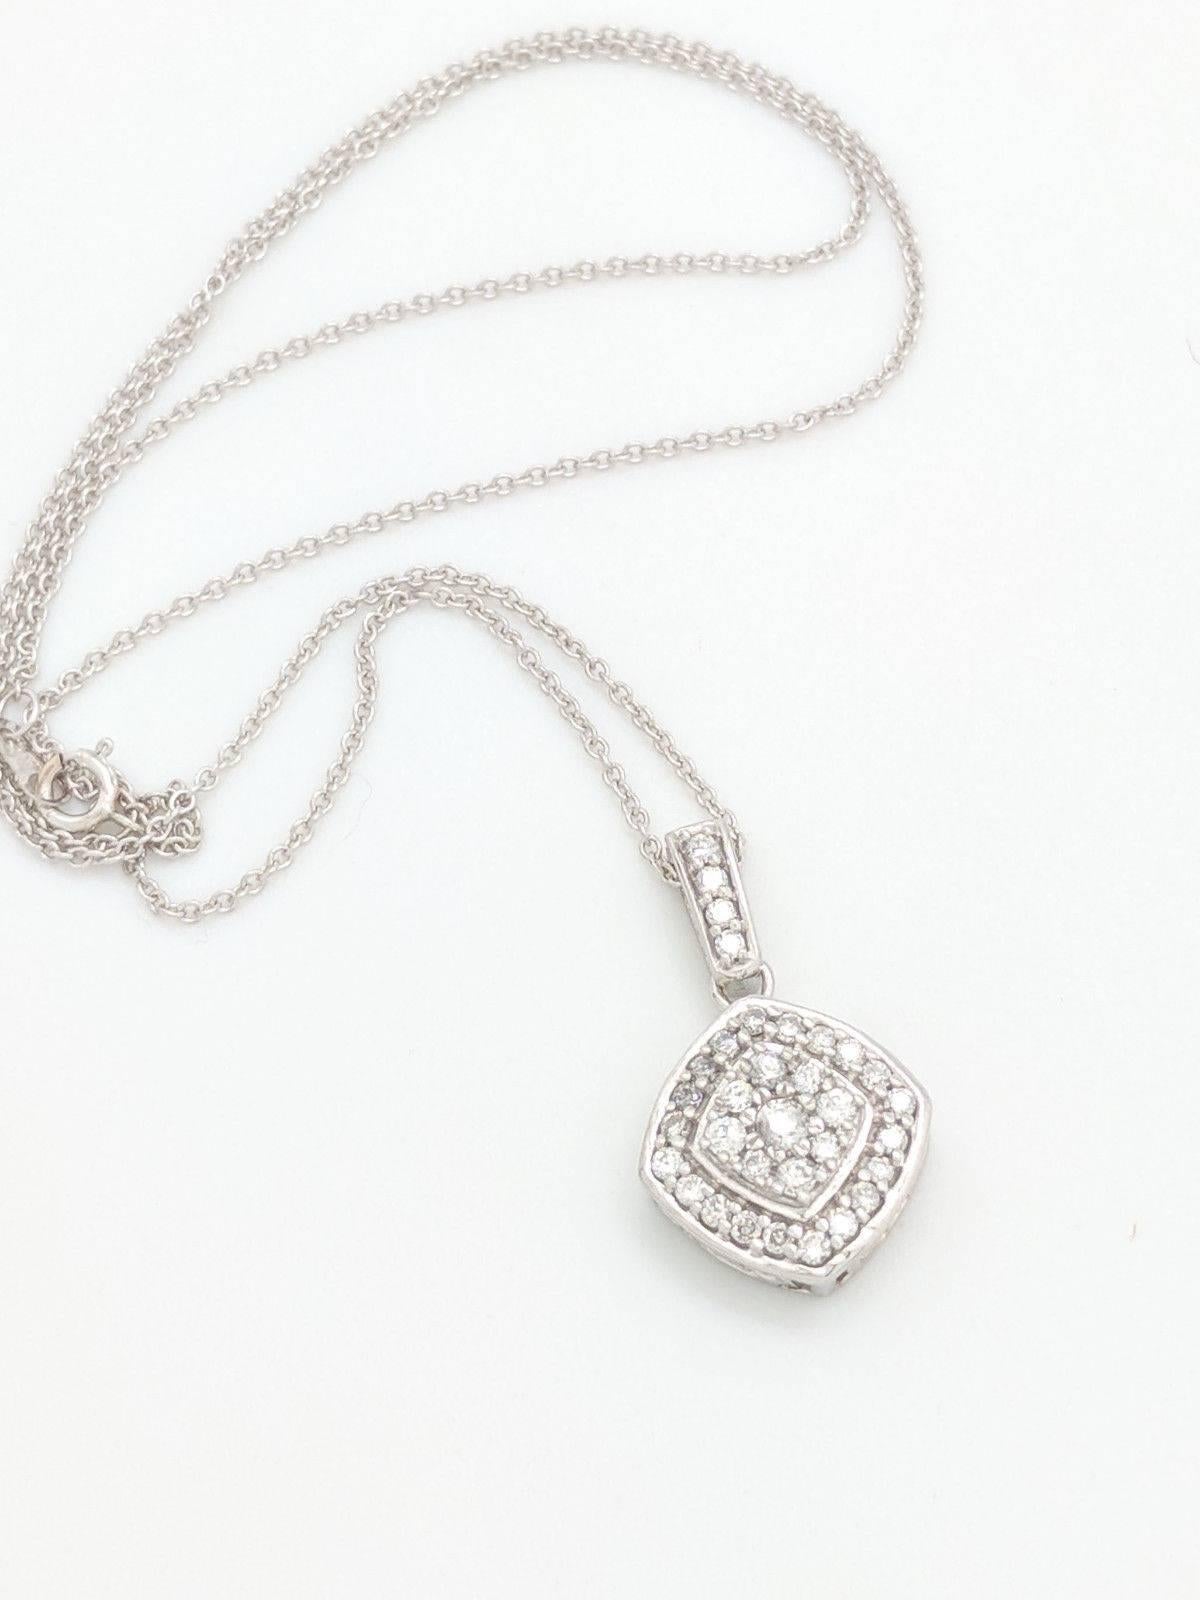 Round Cut 10 Karat White Gold Diamond Cluster Pendant/Necklace .50 Carat